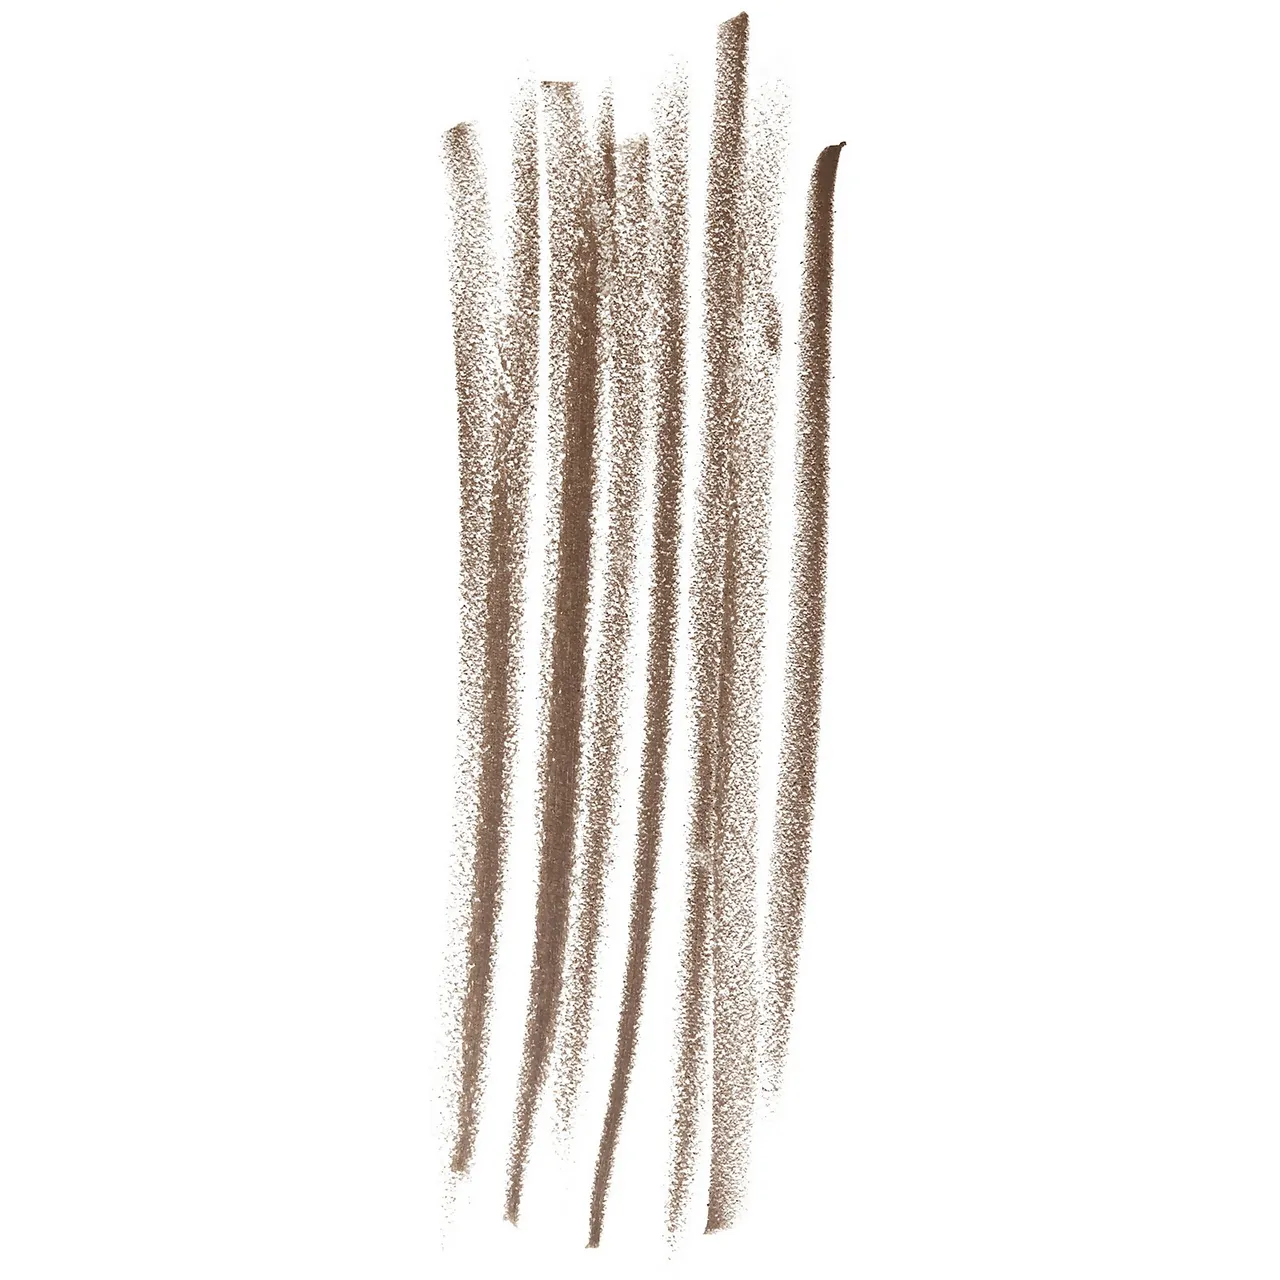 Bobbi Brown Long-Wear Brow Pencil 1.15g (Various Shades) - Honey Brown